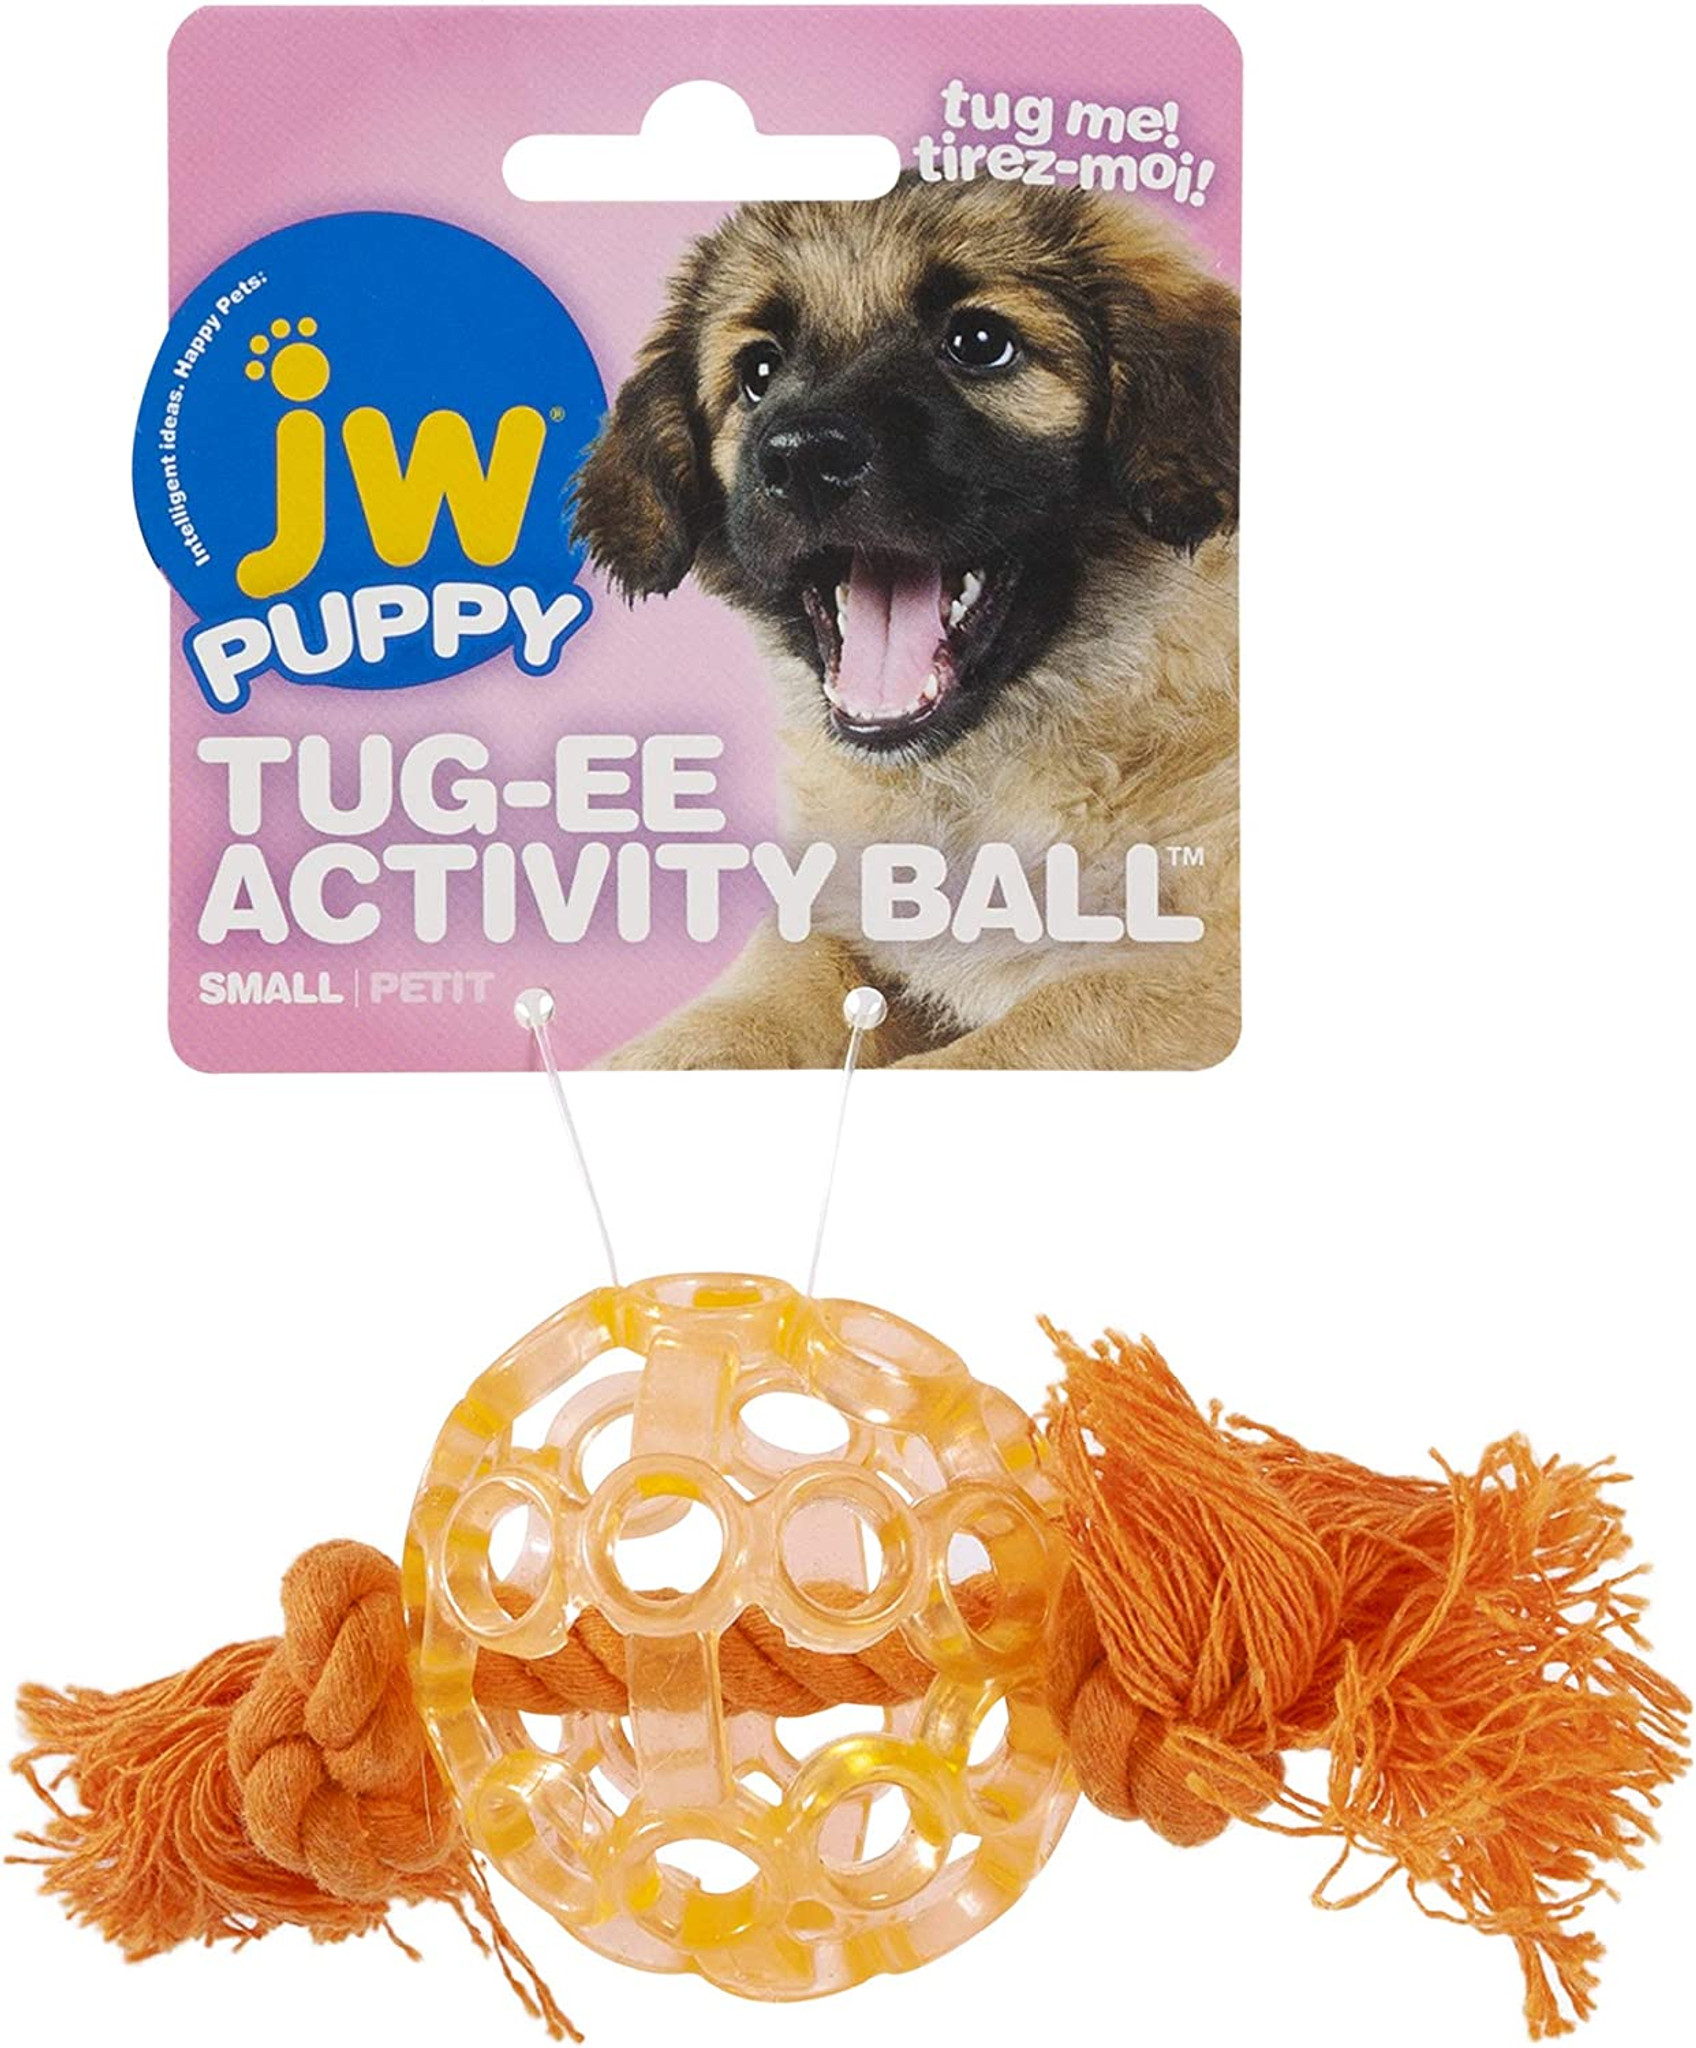 DIY Dog Toys and Treats - Fetch! Pet Care